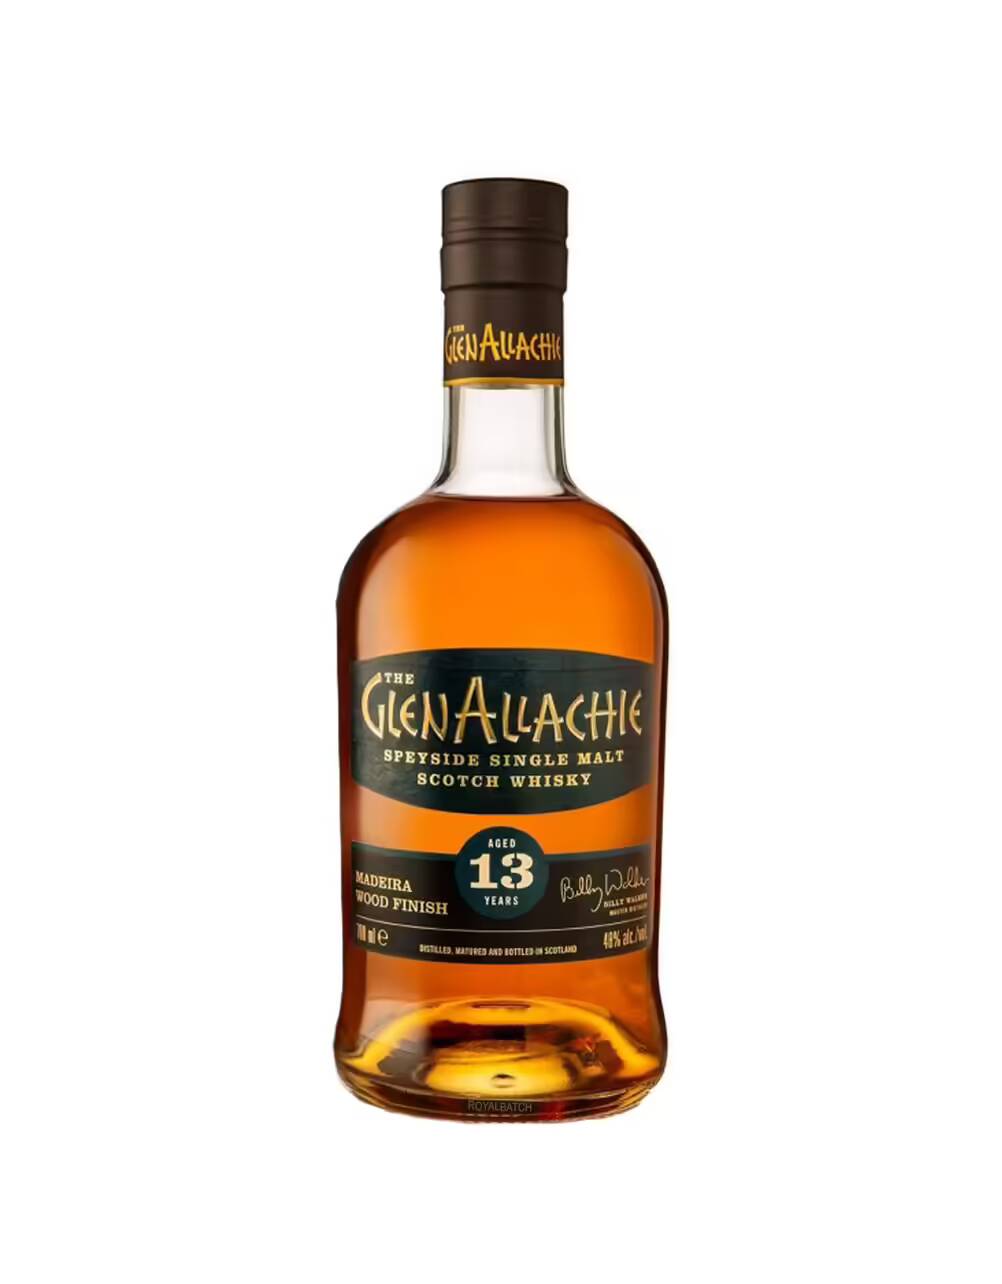 The GlenAllachie 13 Year Old Madeira Wood Finish Single Malt Scotch Whisky